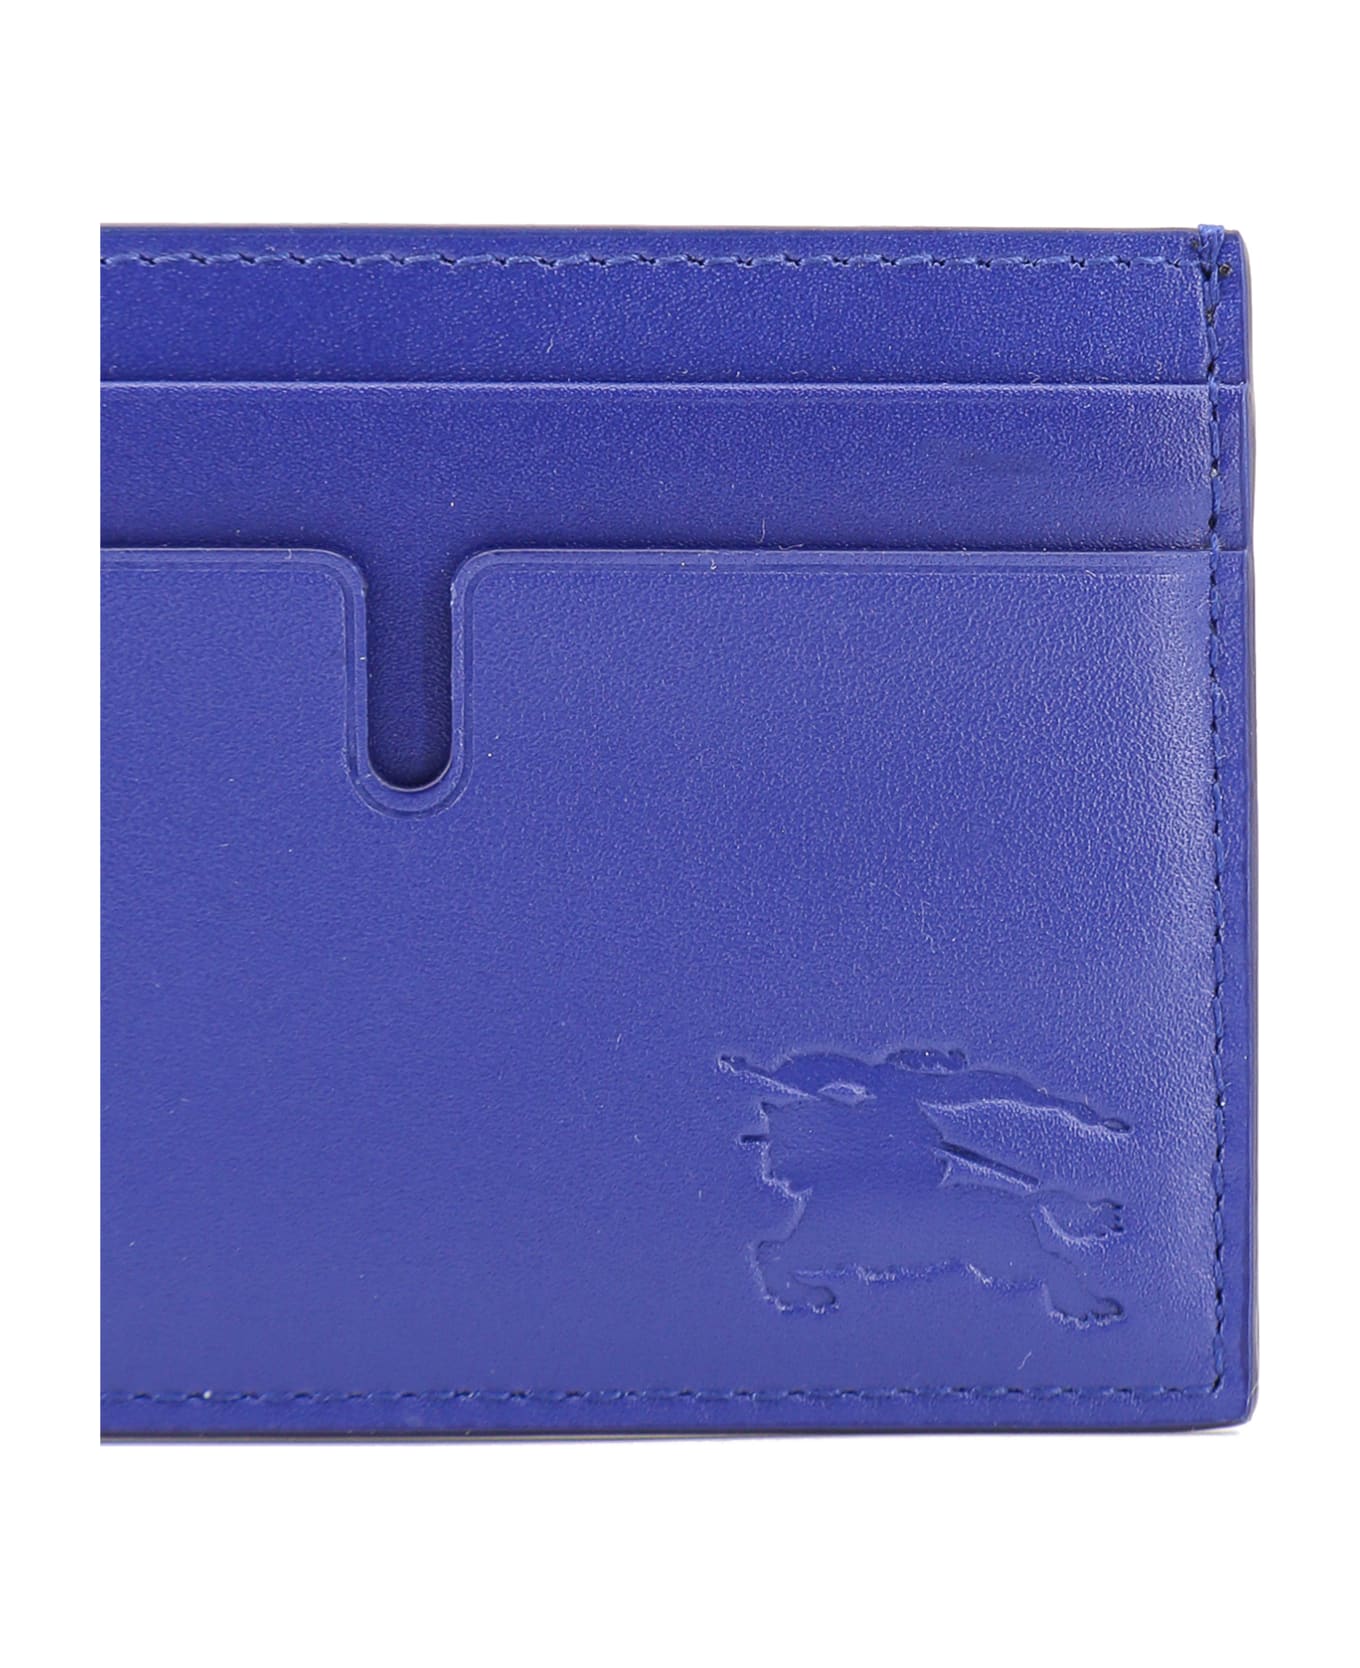 Burberry 5 Slots Card Case - Blue